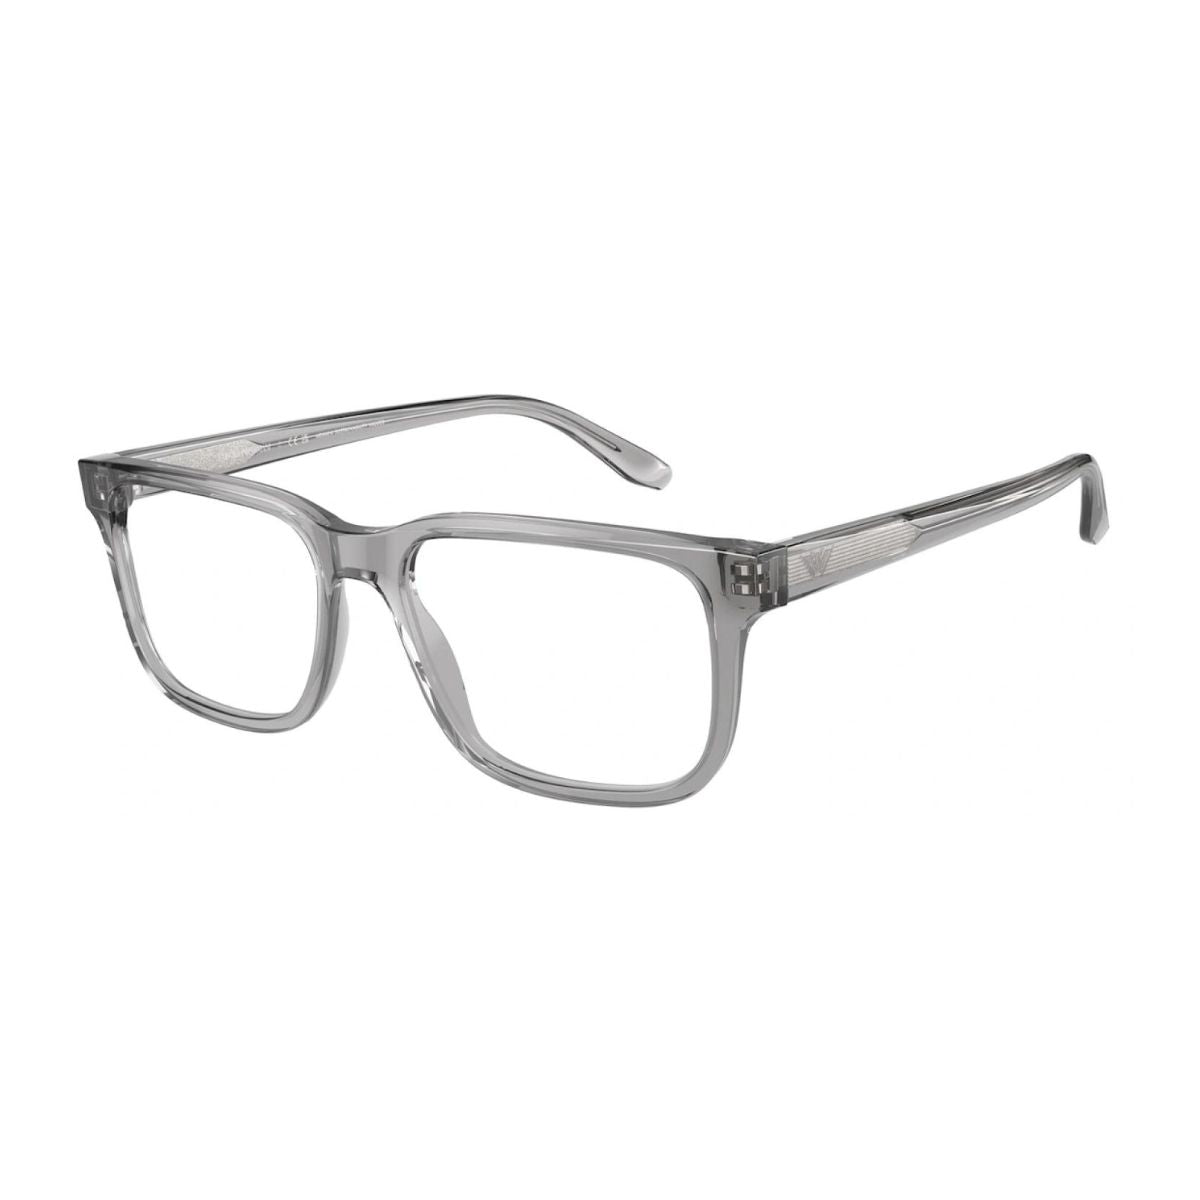 "Best Emporio Armani 3218 5075 Eyeglass Frames For Men's At Optorium"